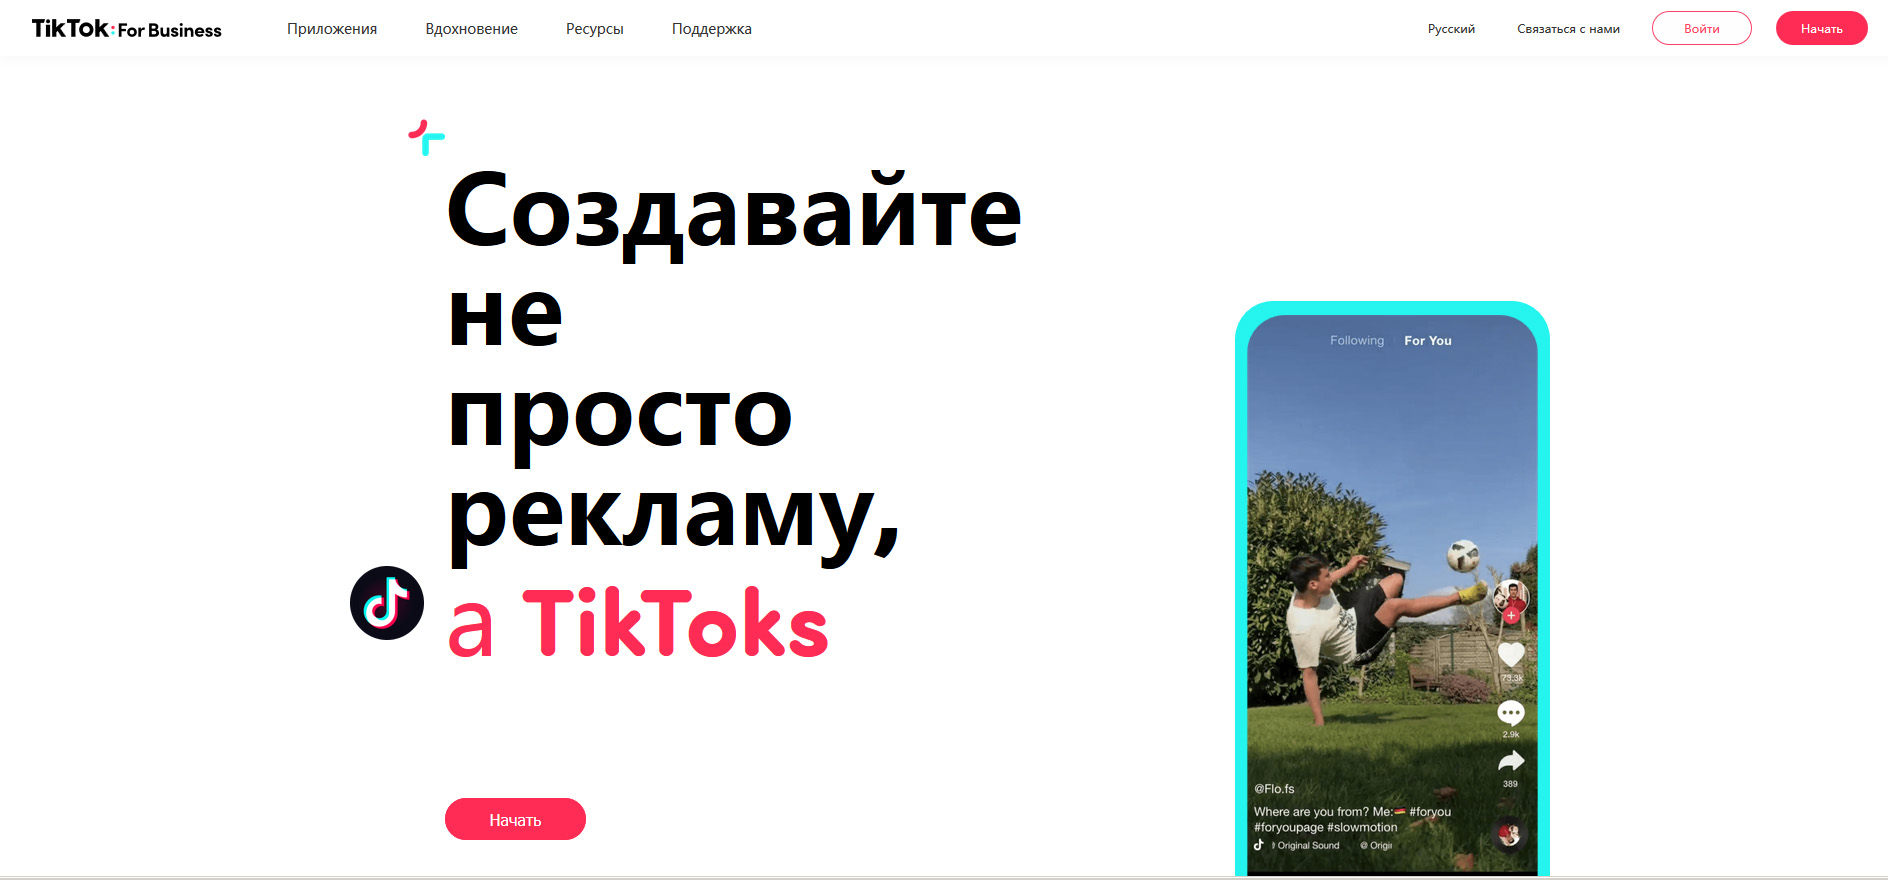 TikTok for Business: TikTok запустил платформу для бизнеса